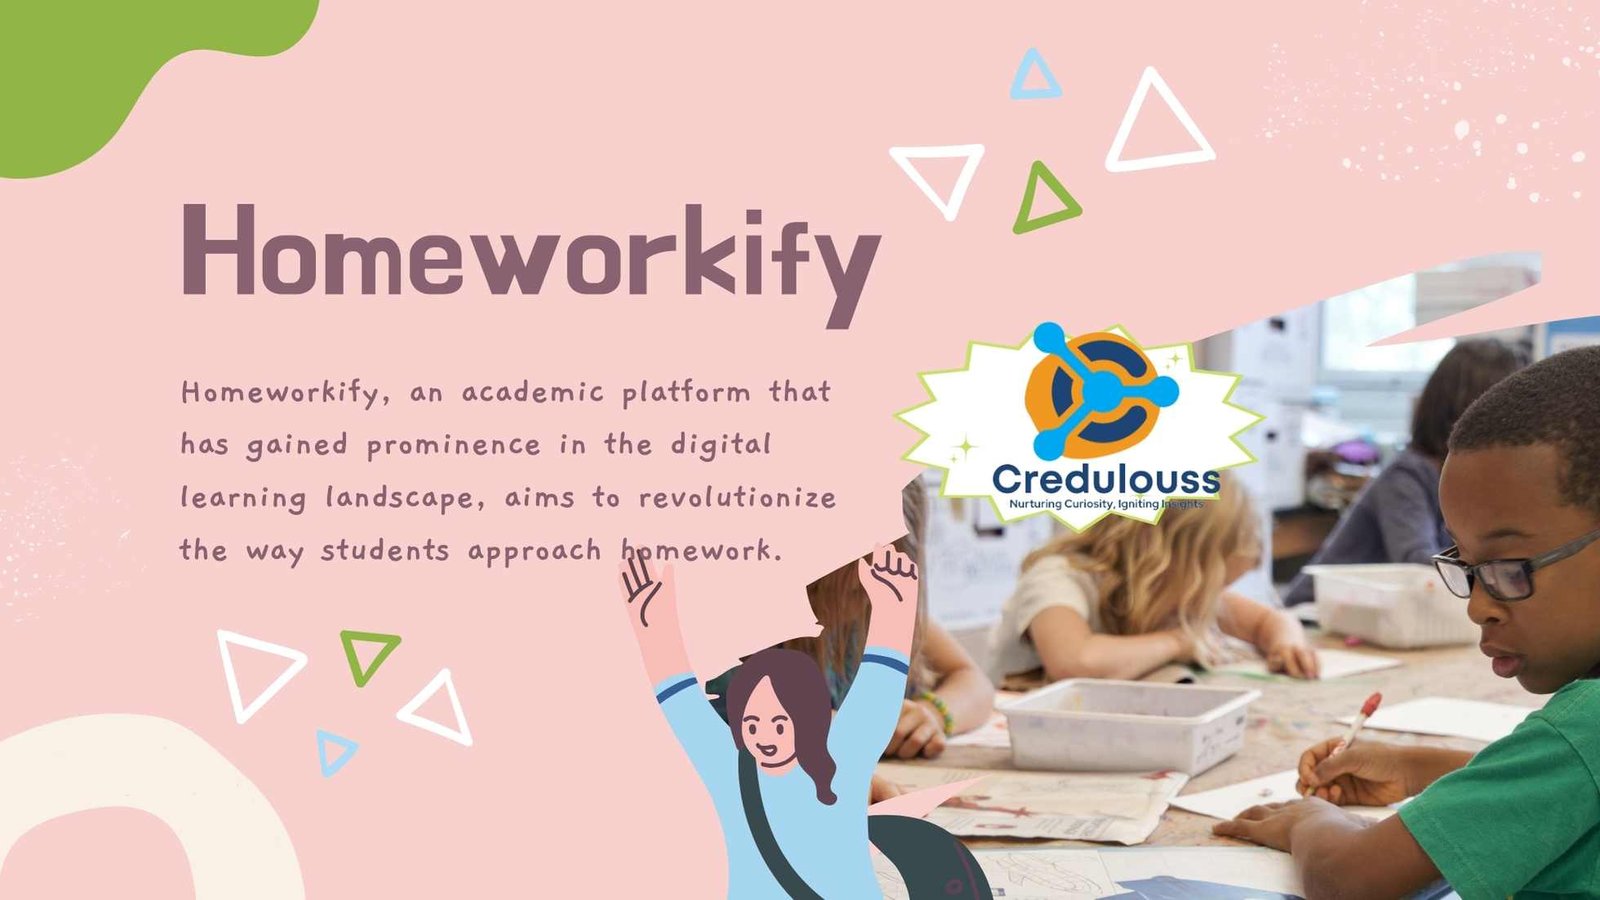 Homeworkify